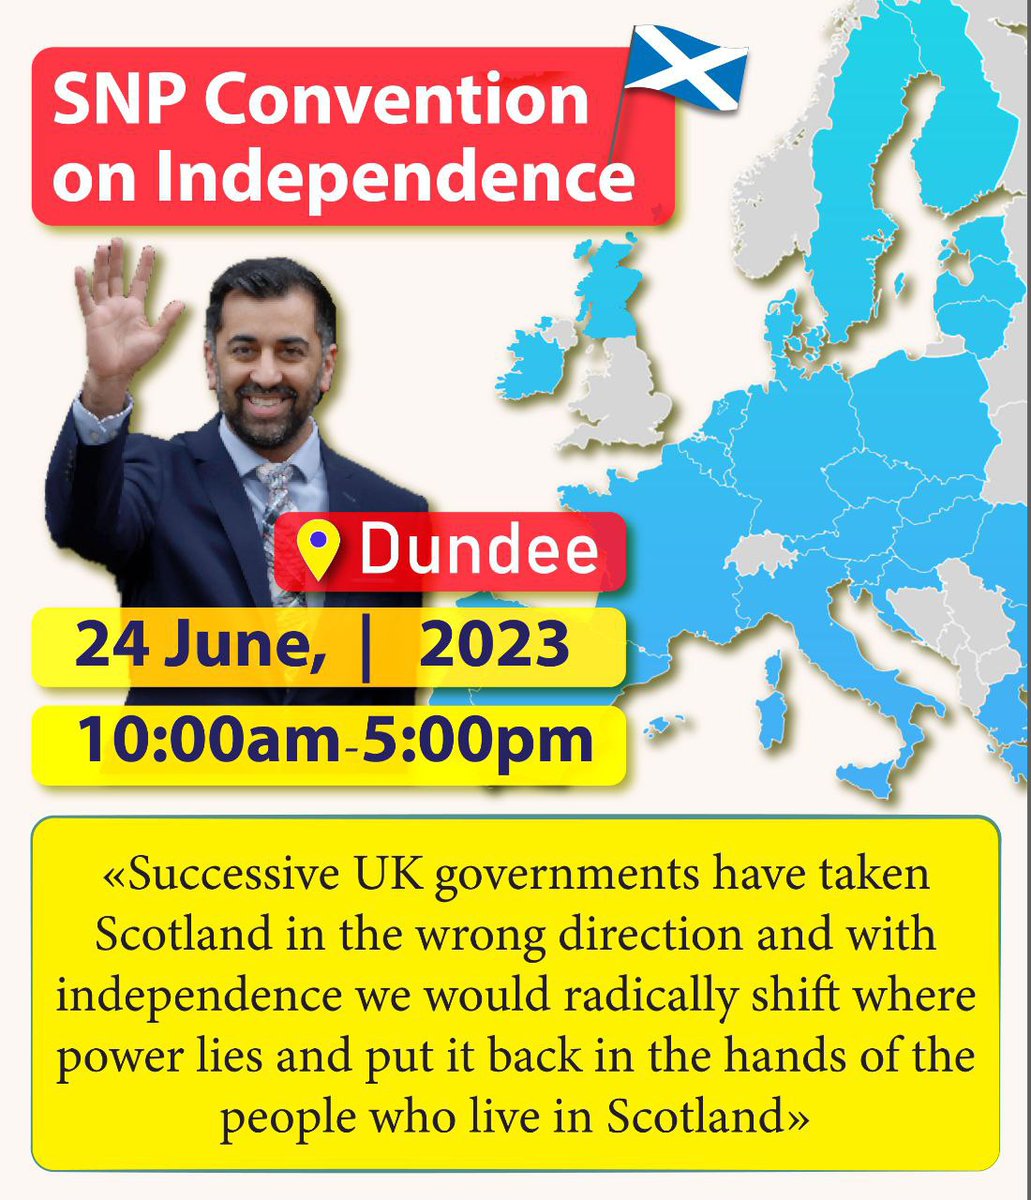 SNP Convention on Independence 🏴󠁧󠁢󠁳󠁣󠁴󠁿
#ScottishIndependence
#SNP
#HumzaForScotland